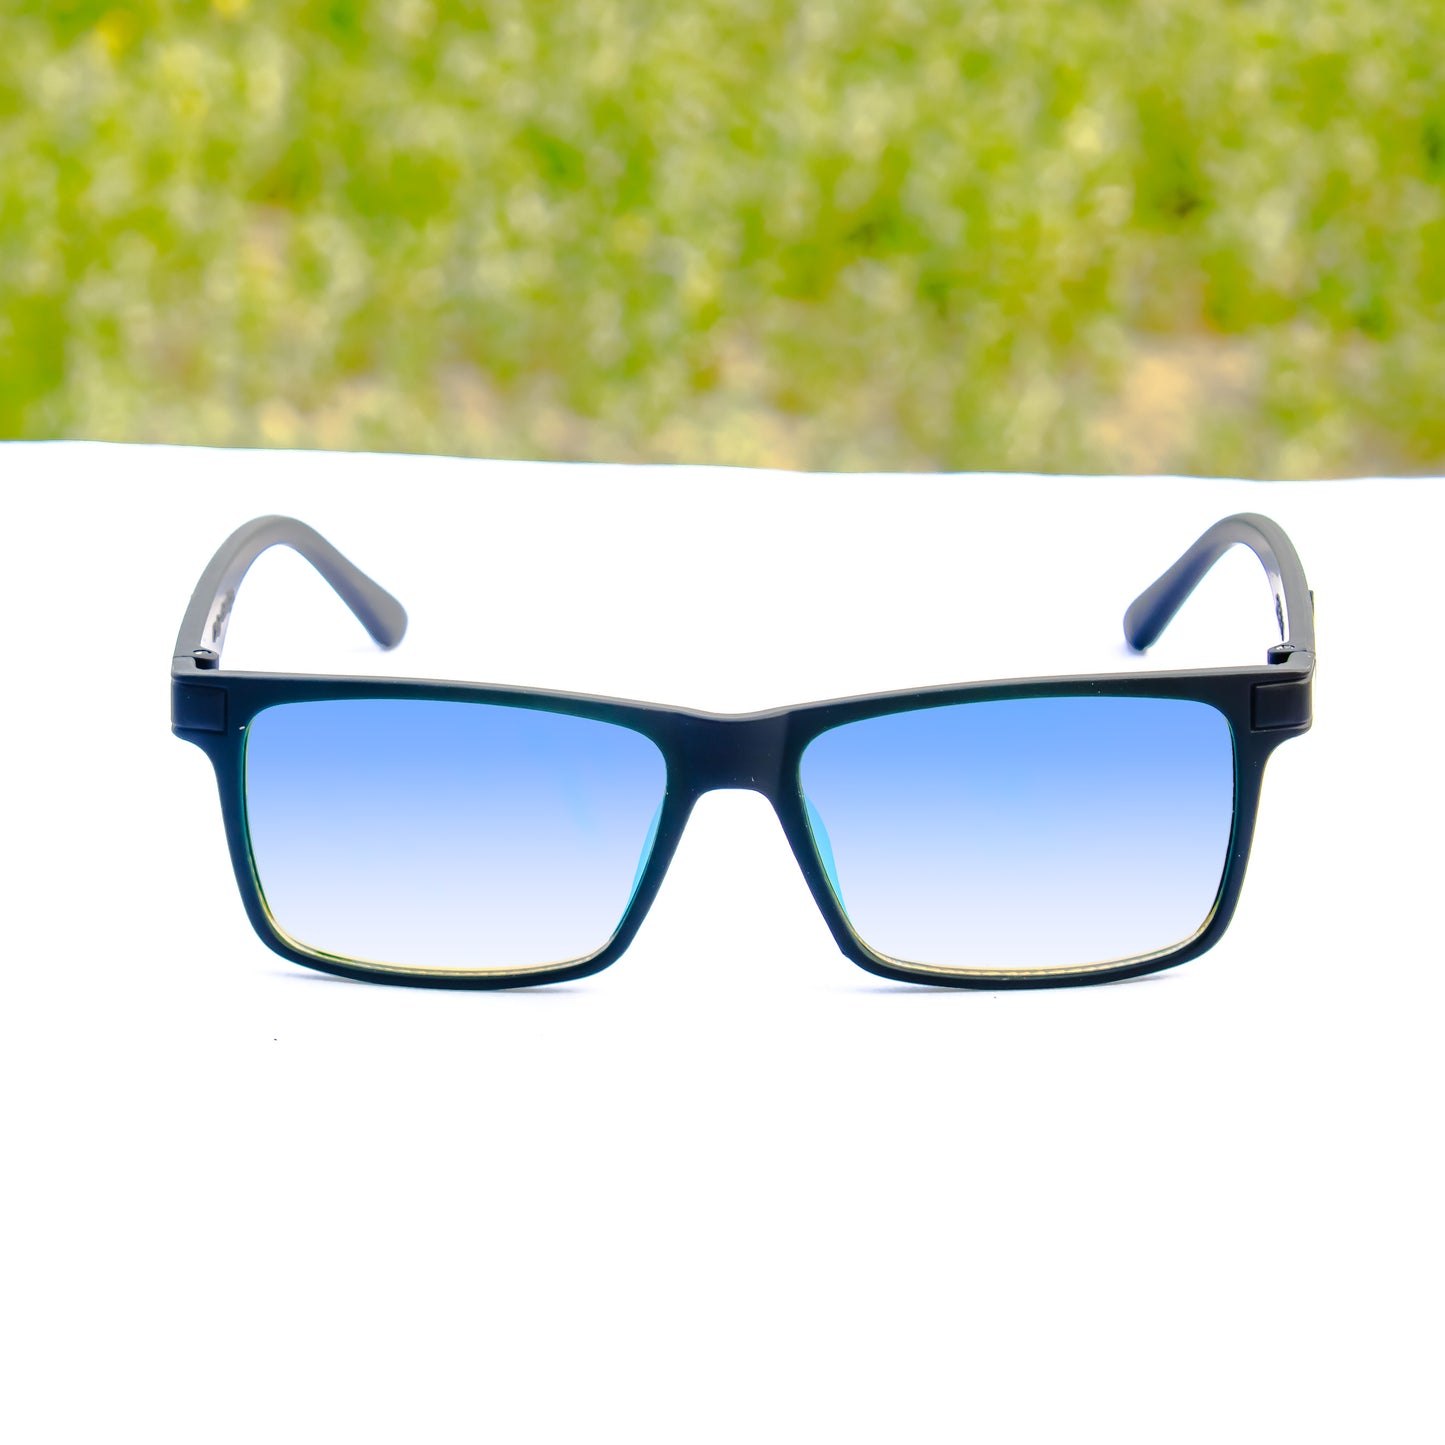 Jiebo Rectangular Blue Sunglasses